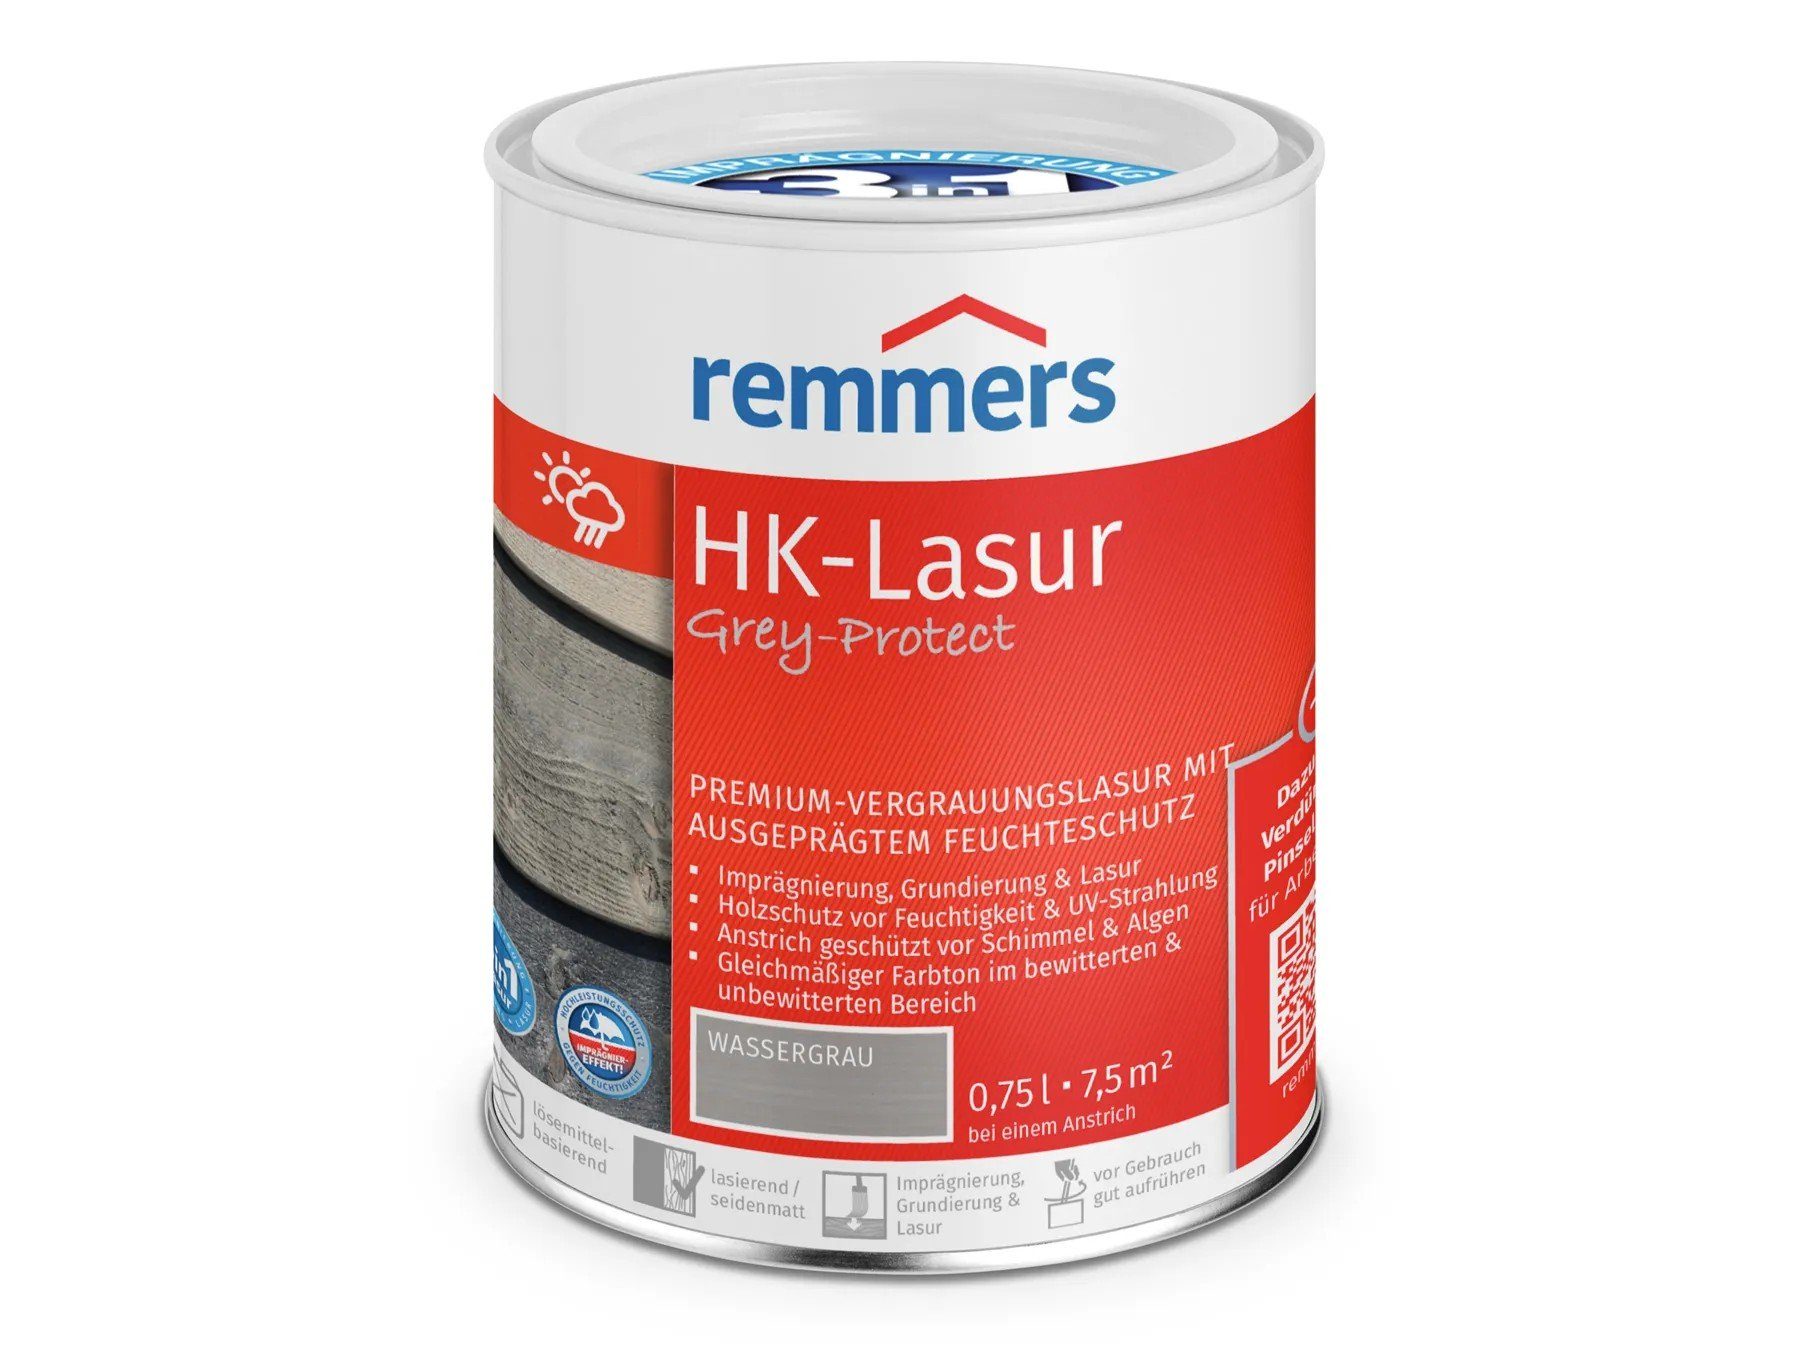 Remmers Holzschutzlasur HK-Lasur 3in1 Grey-Protect wassergrau (FT-20924) | Holzlasuren